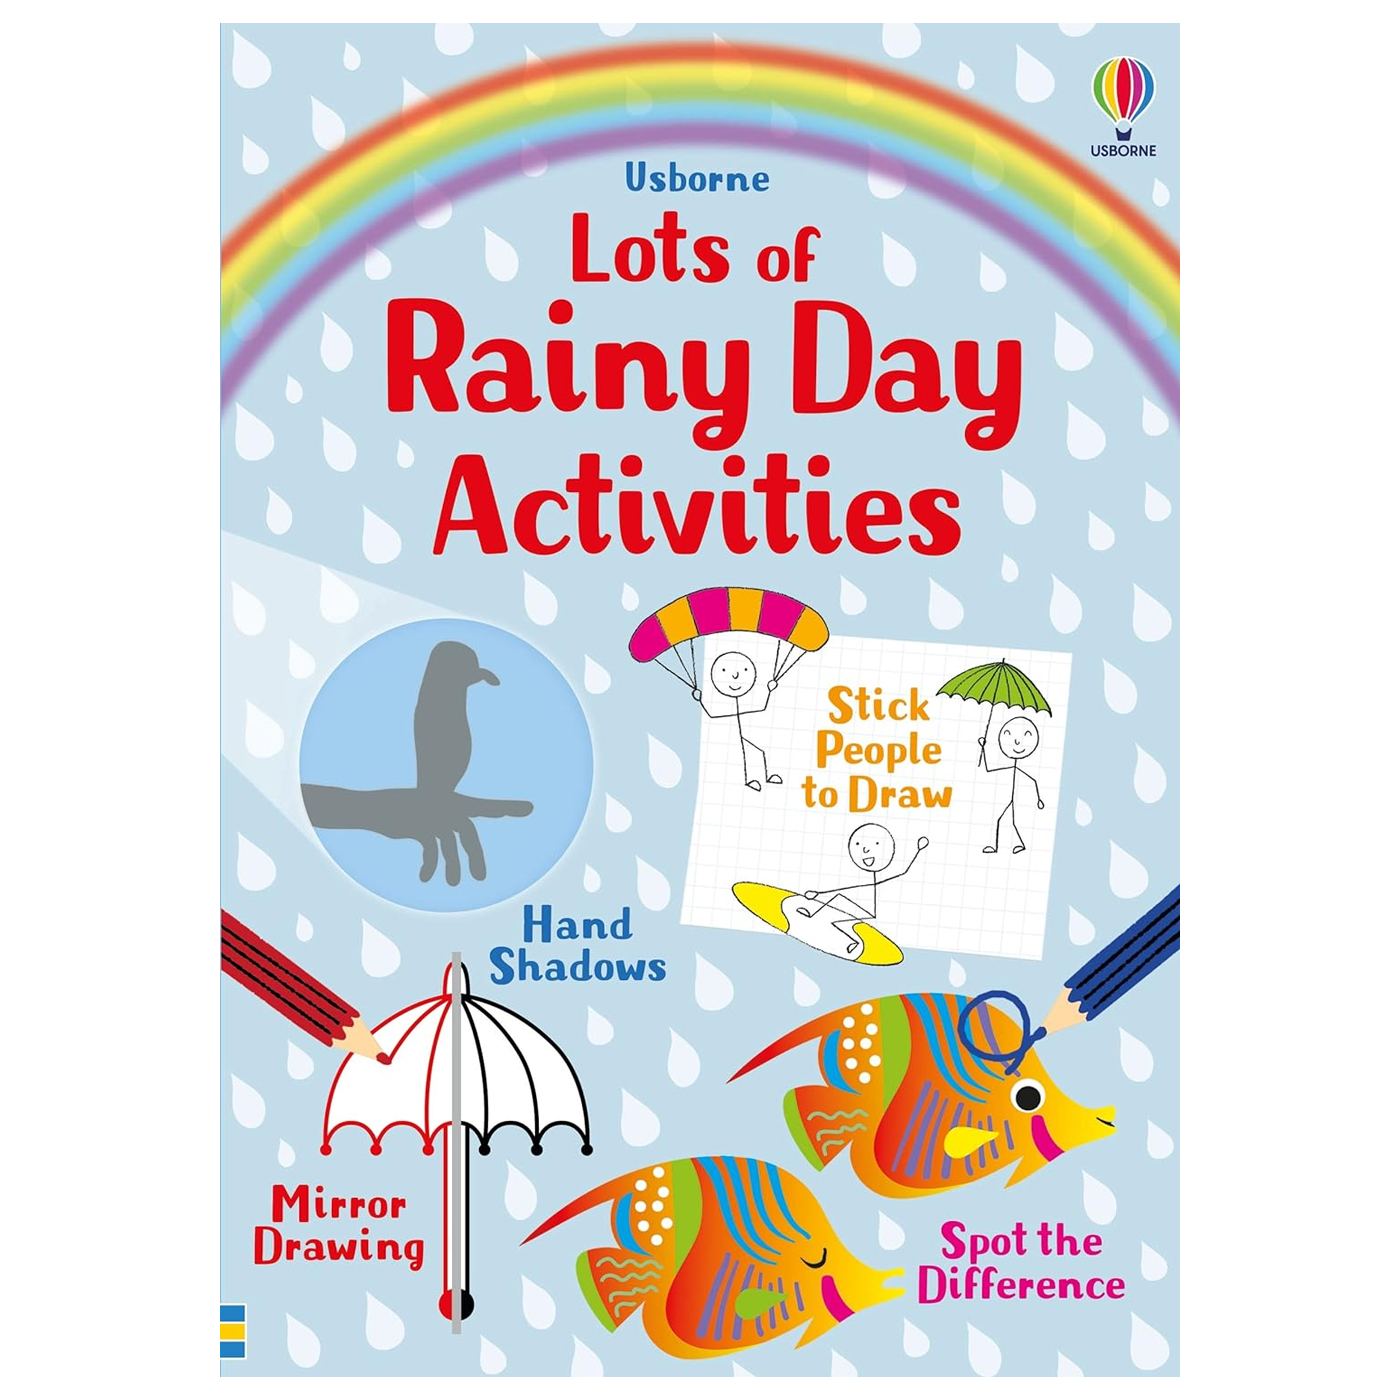  Lots of Rainy Day Activities